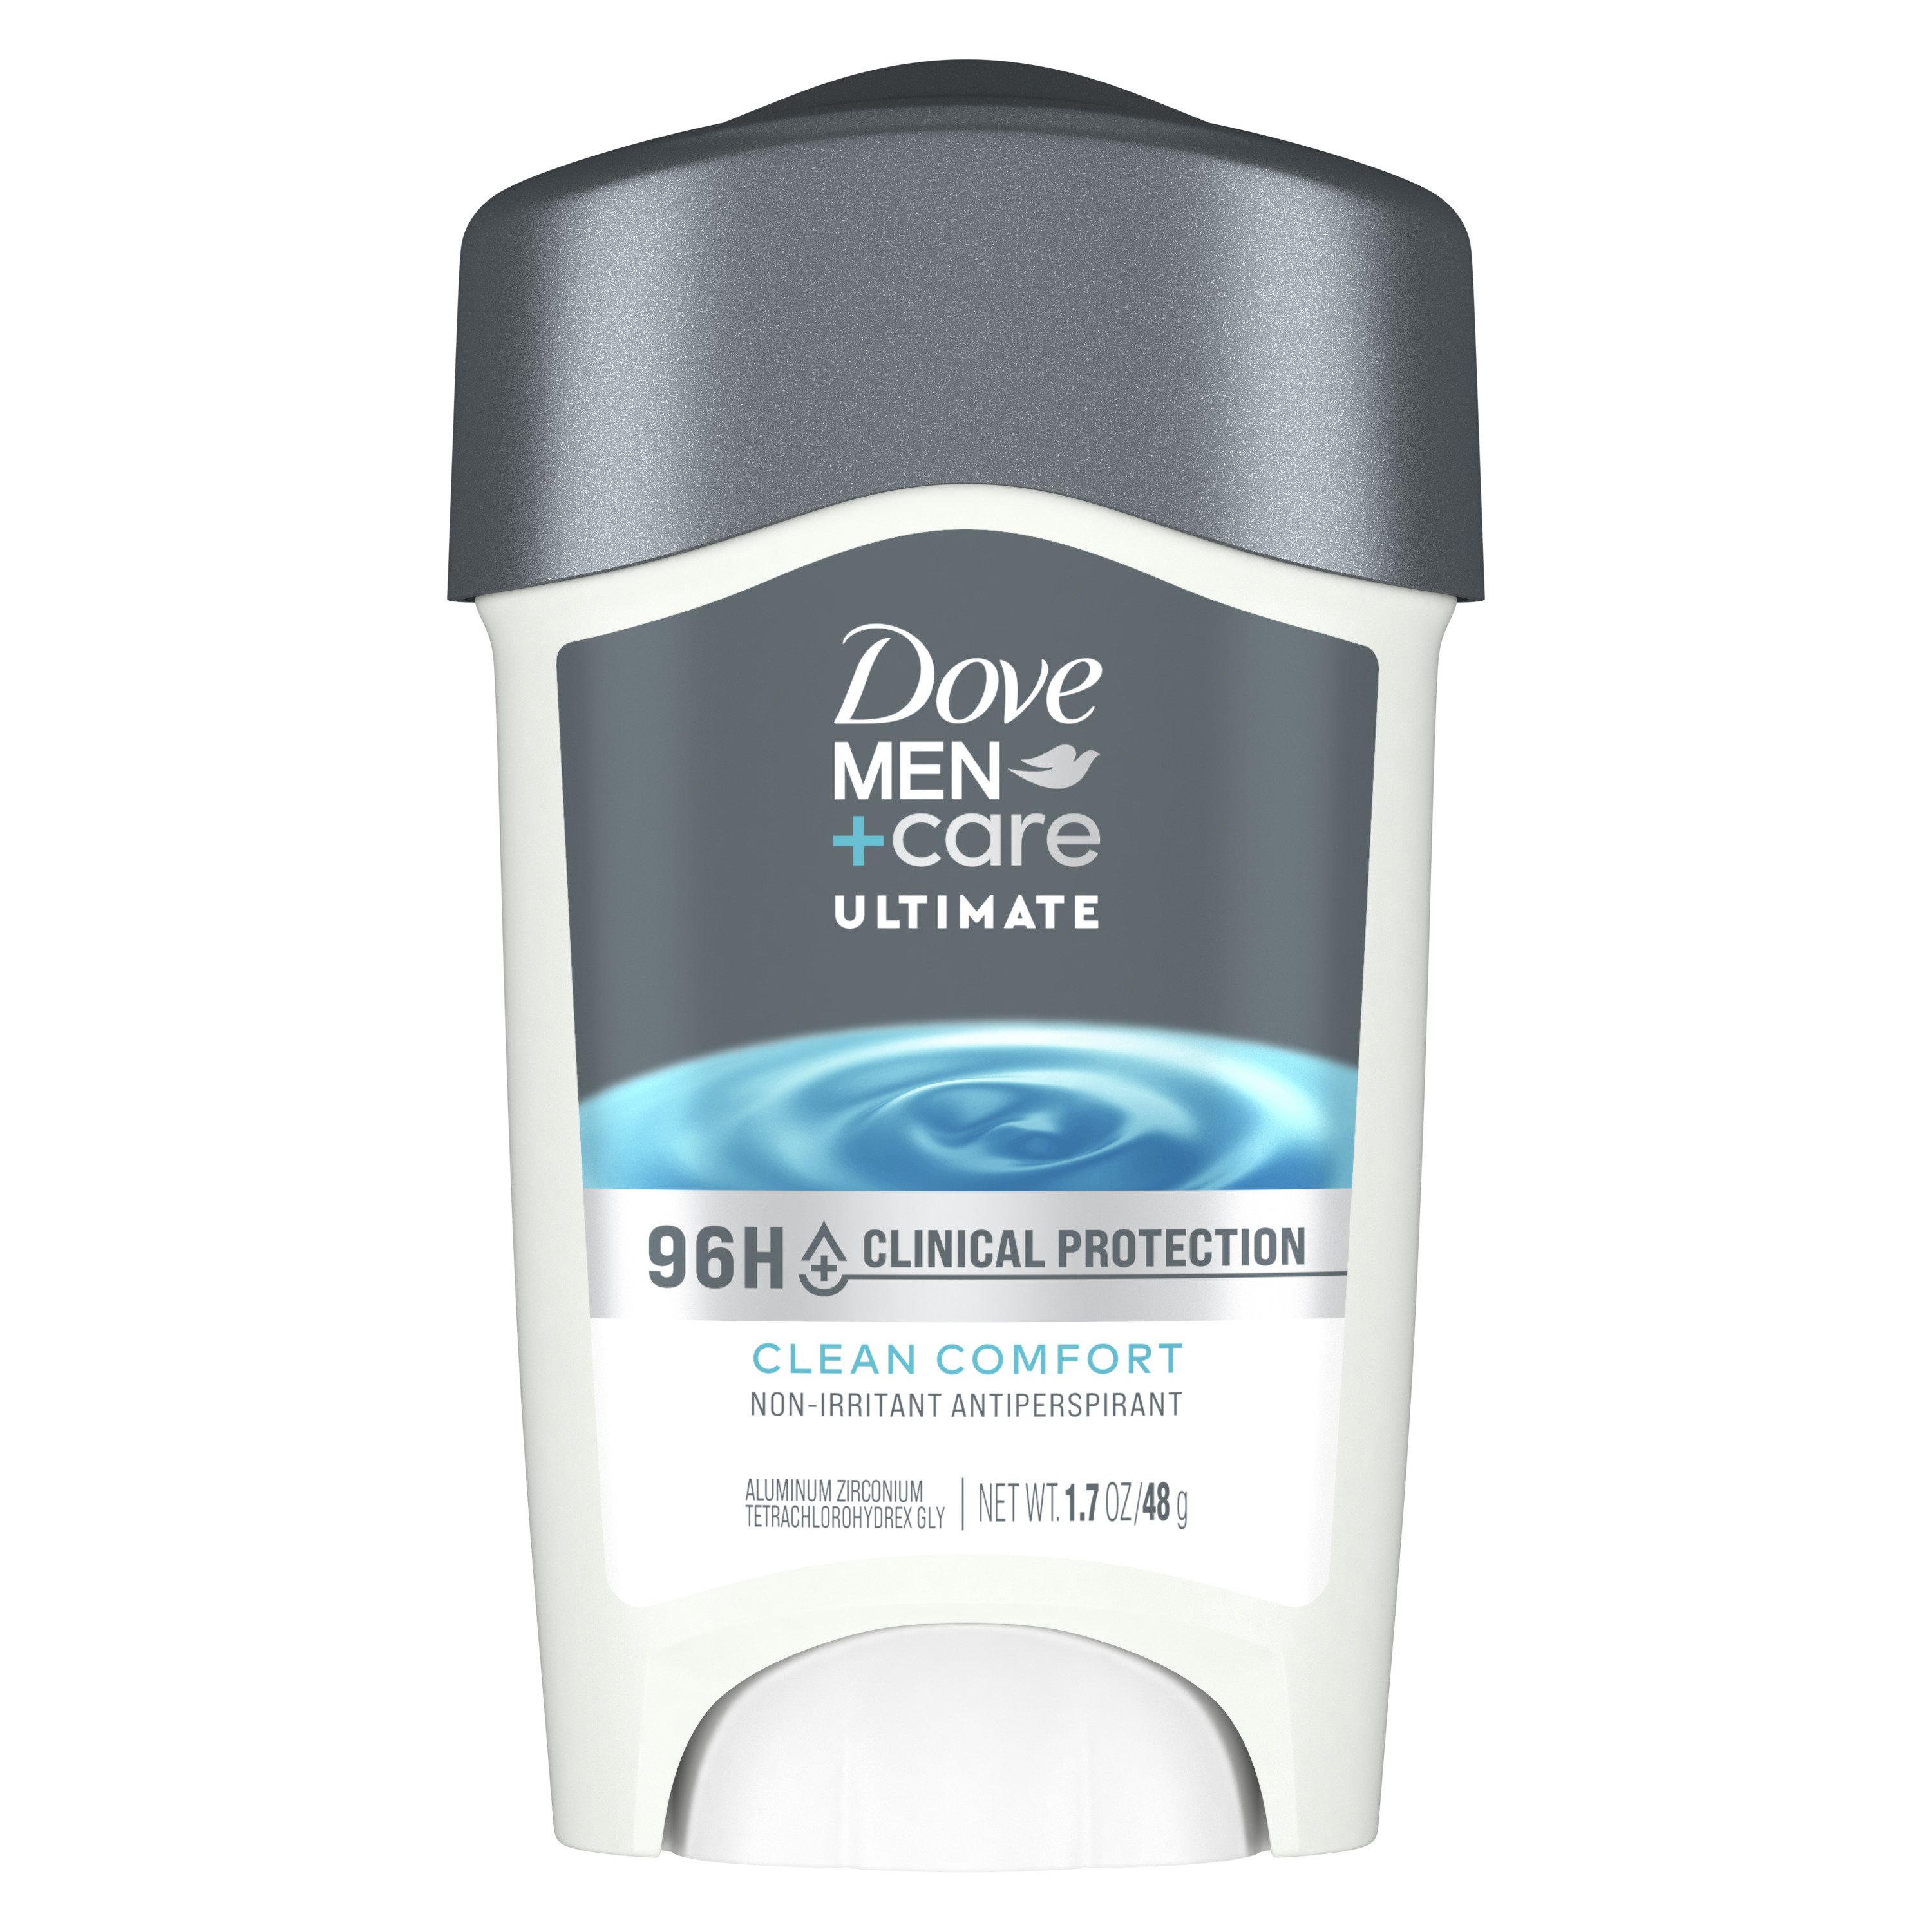 Dove Men+Care Clinical Protection Antiperspirant - Clean Comfort - Shop Deodorant & Antiperspirant H-E-B